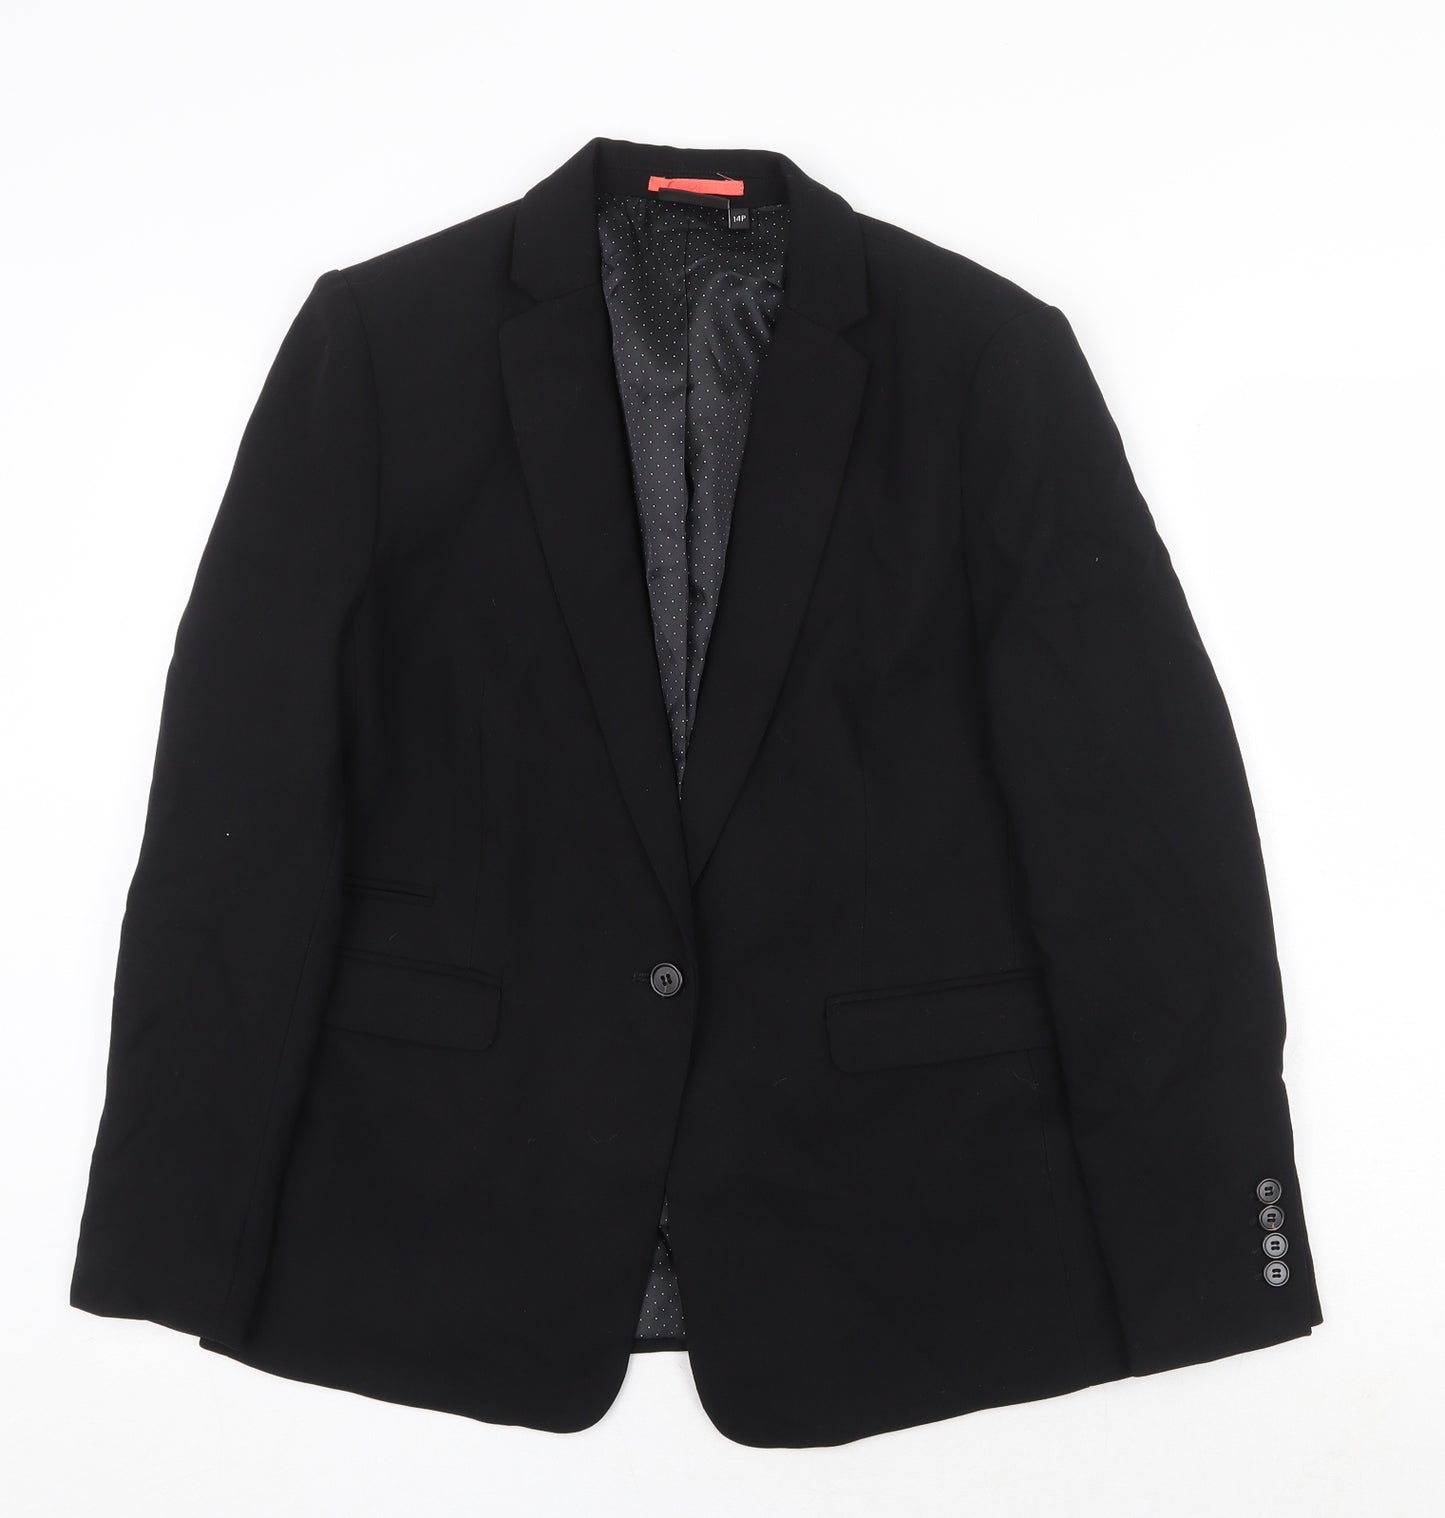 NEXT Womens Black Polyester Jacket Suit Jacket Size 14 Button